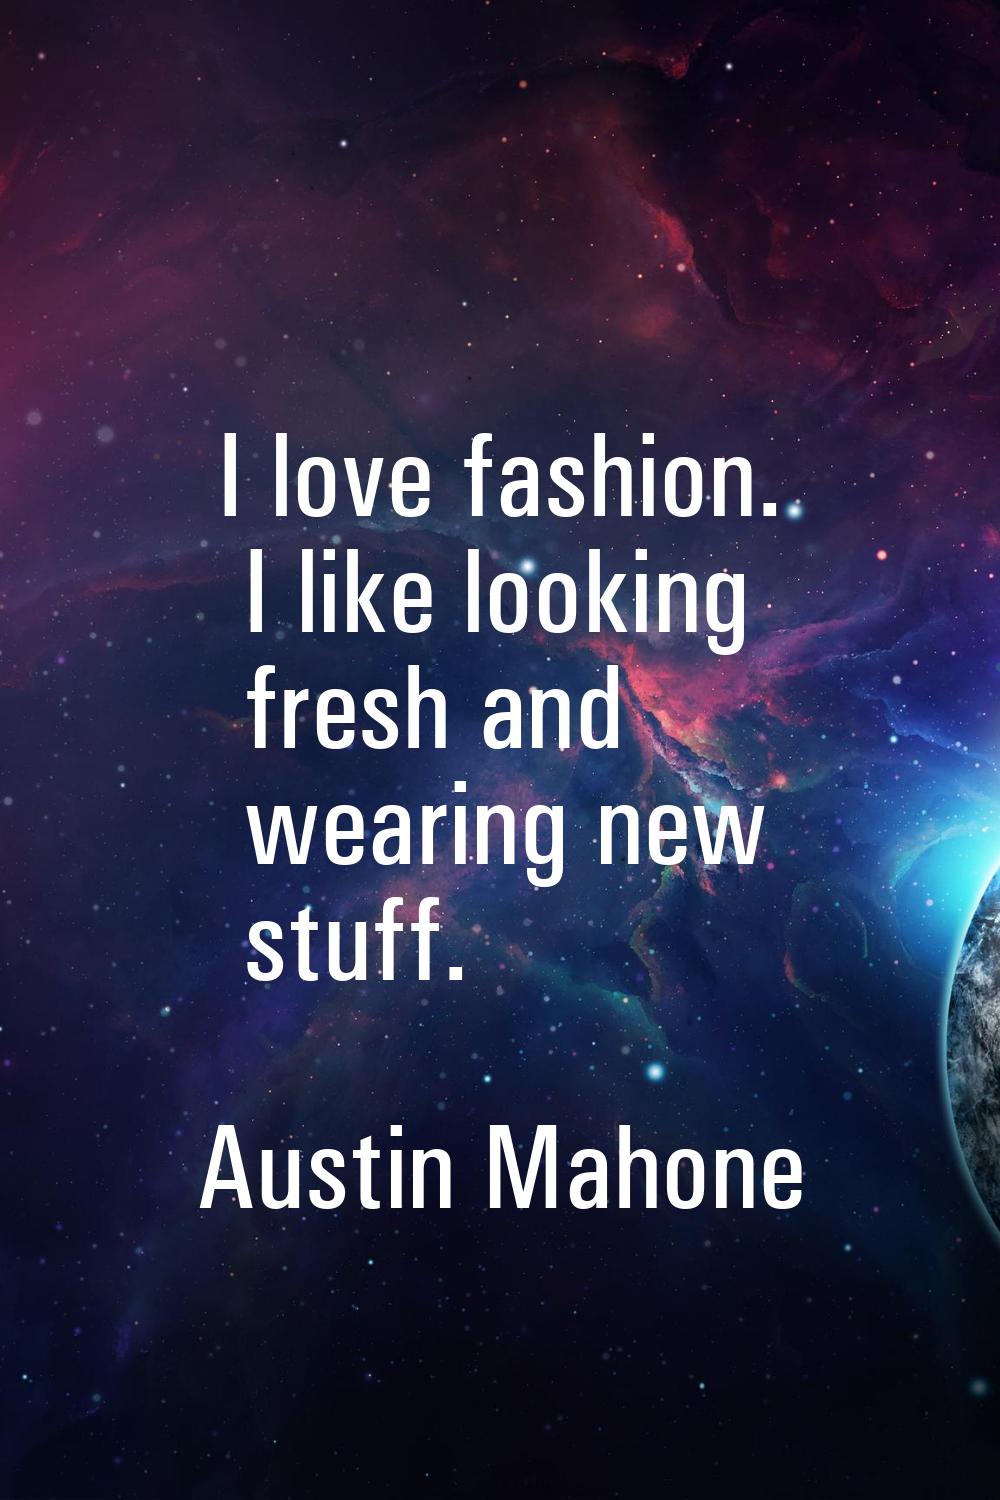 I love fashion. I like looking fresh and wearing new stuff.